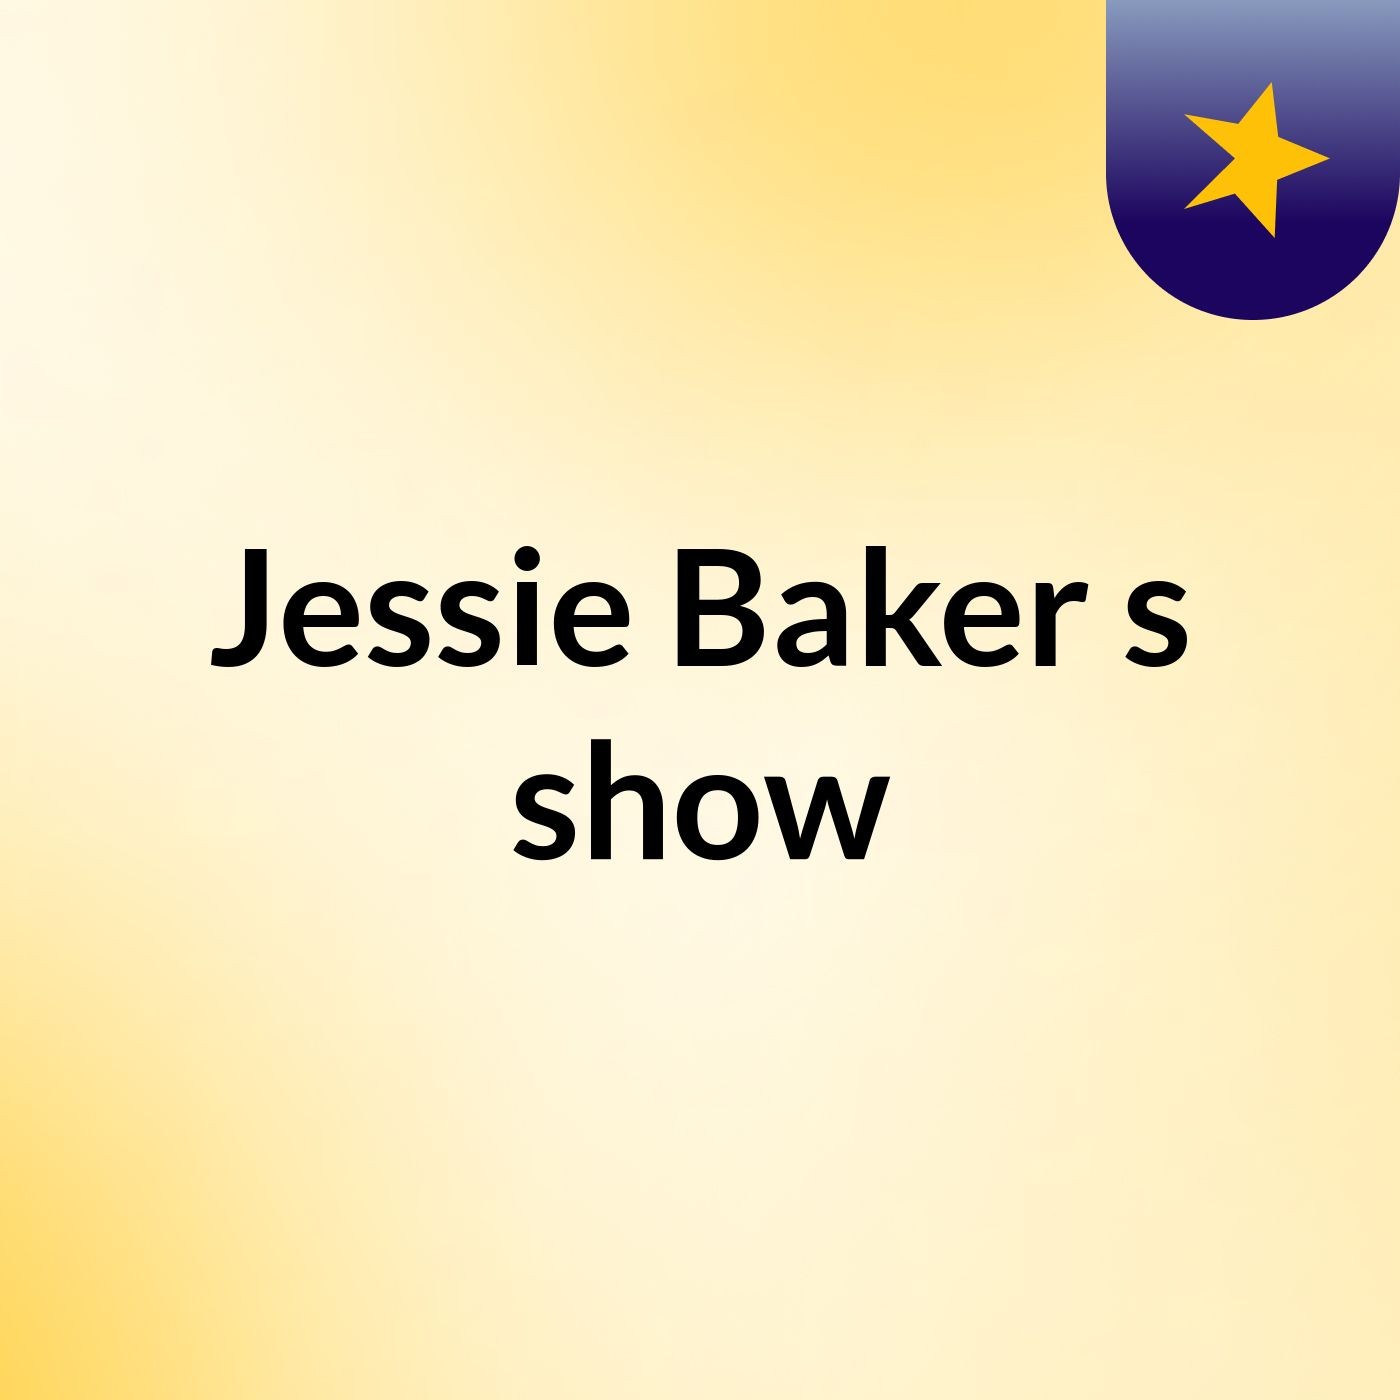 Jessie Baker's show